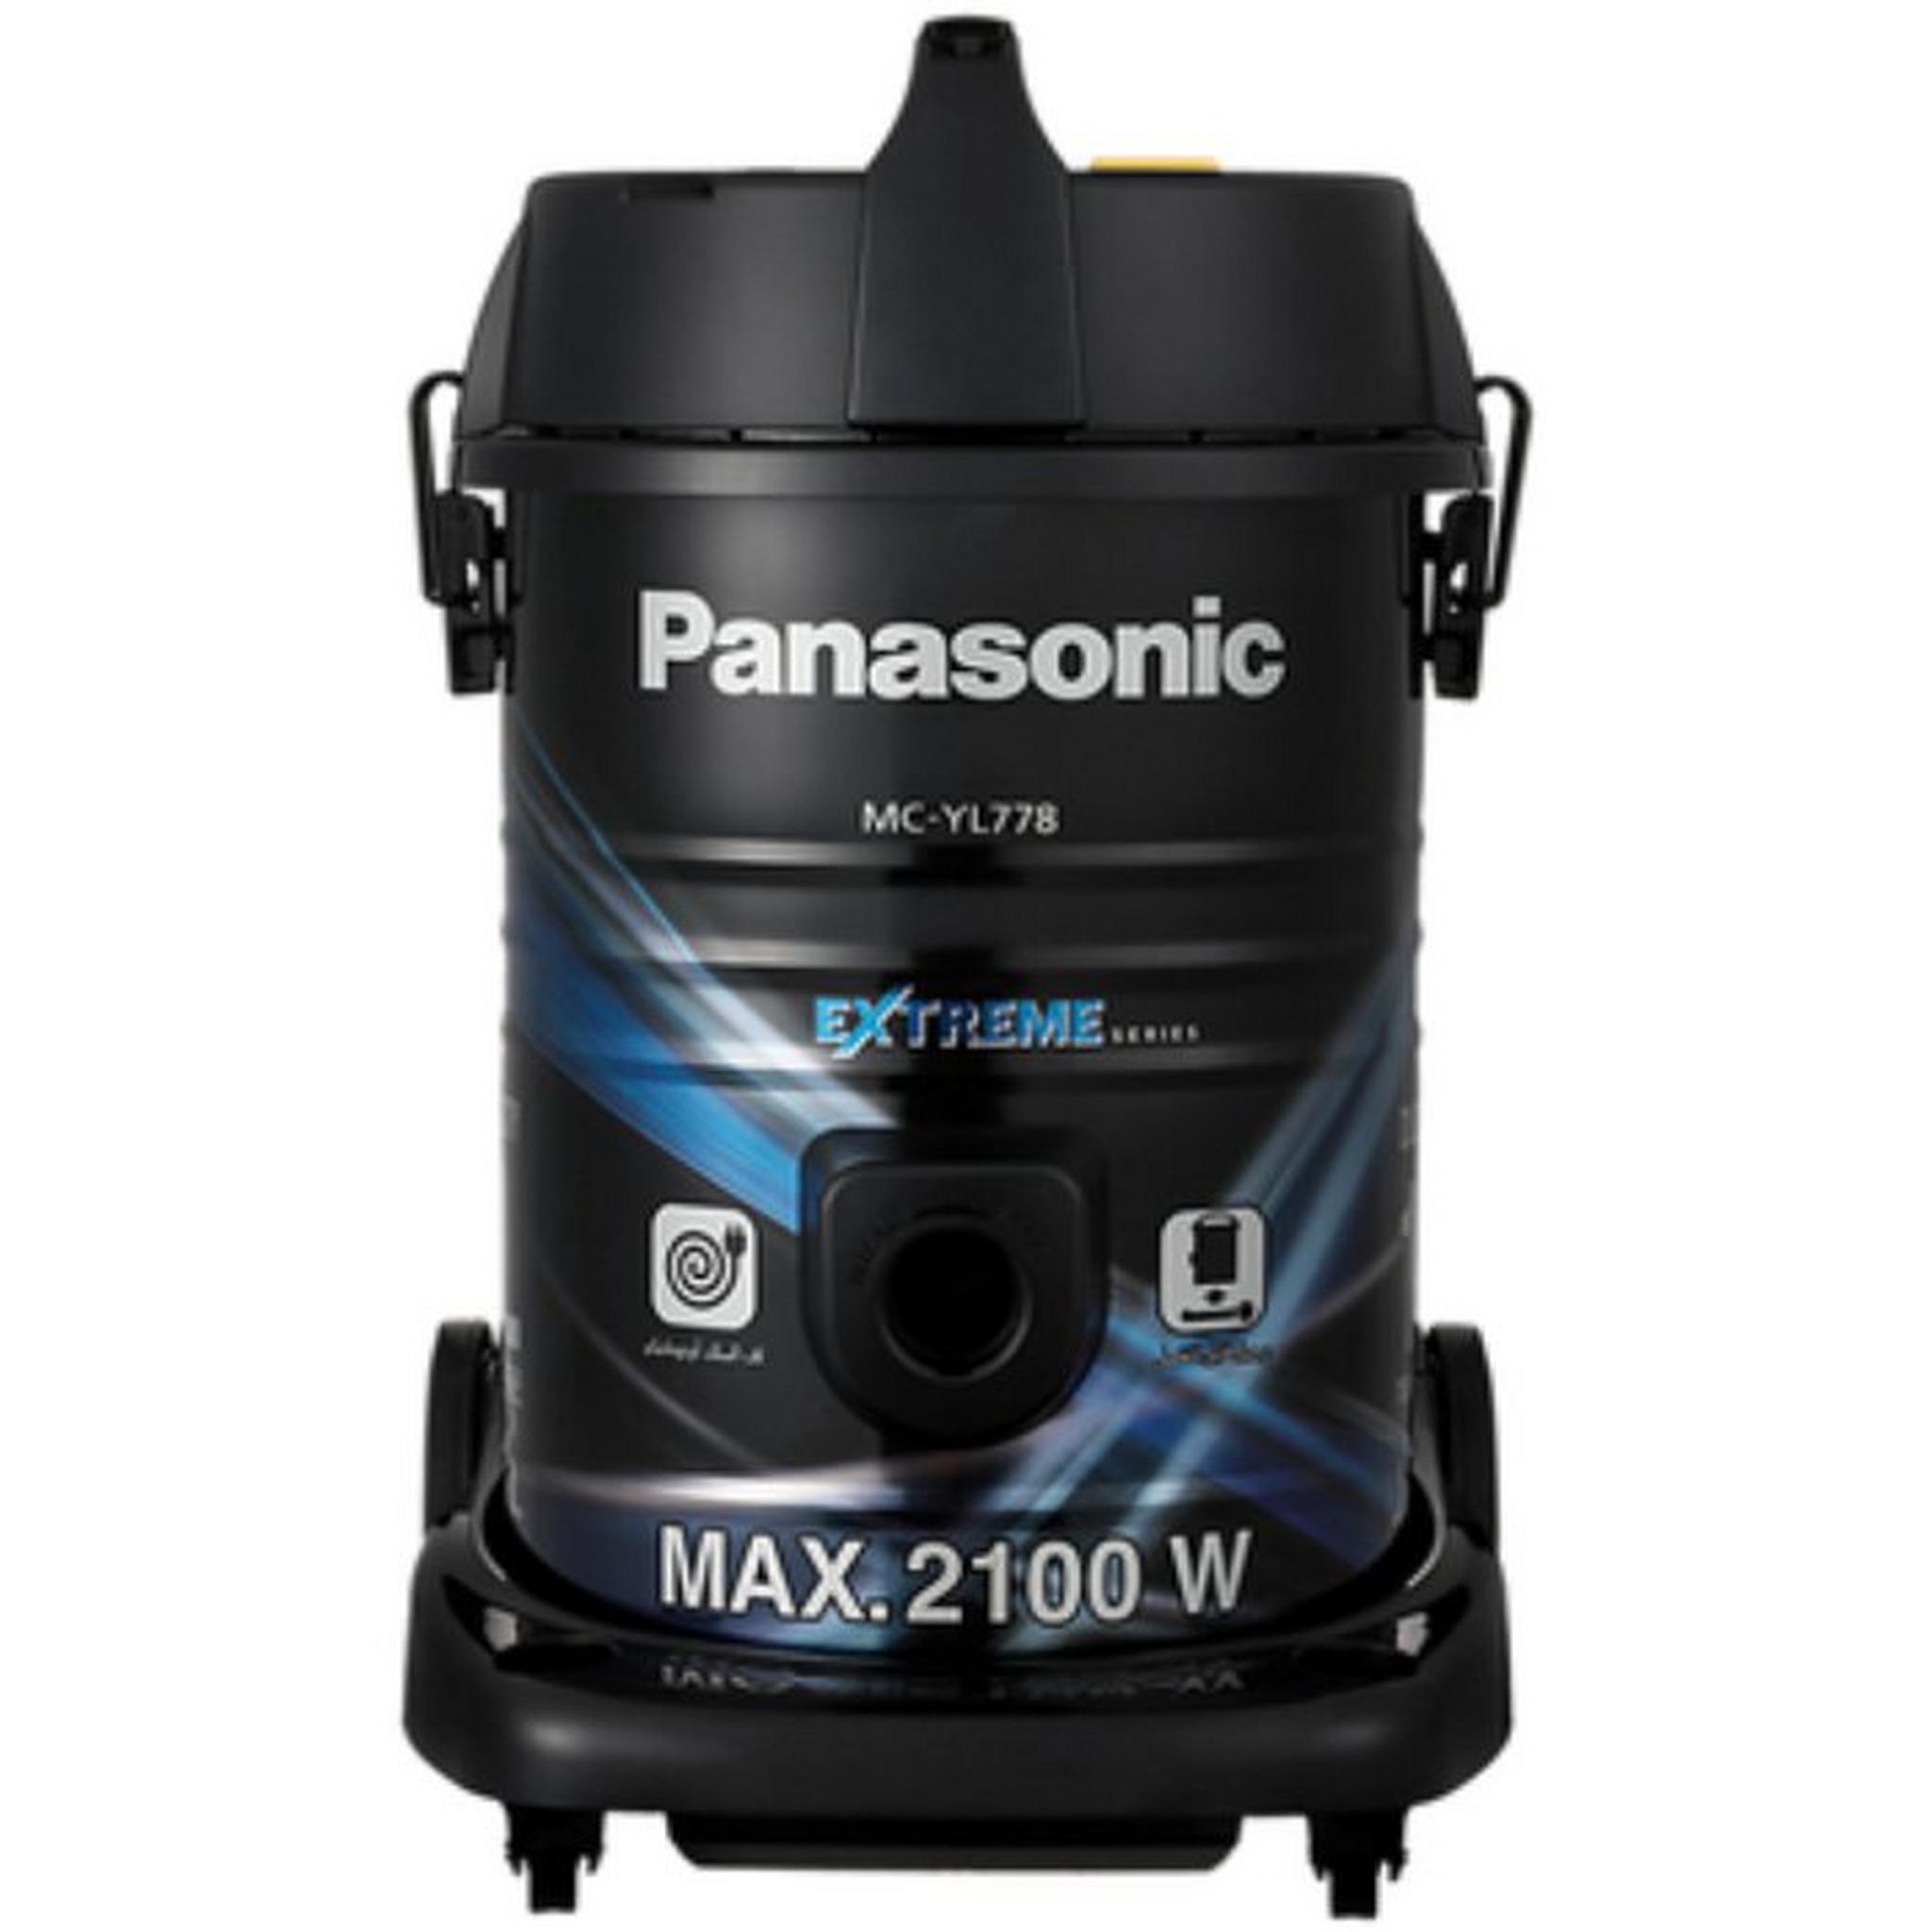 Panasonic Drum Vacuum Cleaner, 2100 W, 18 Liters, MC-YL778AQ47 - Black